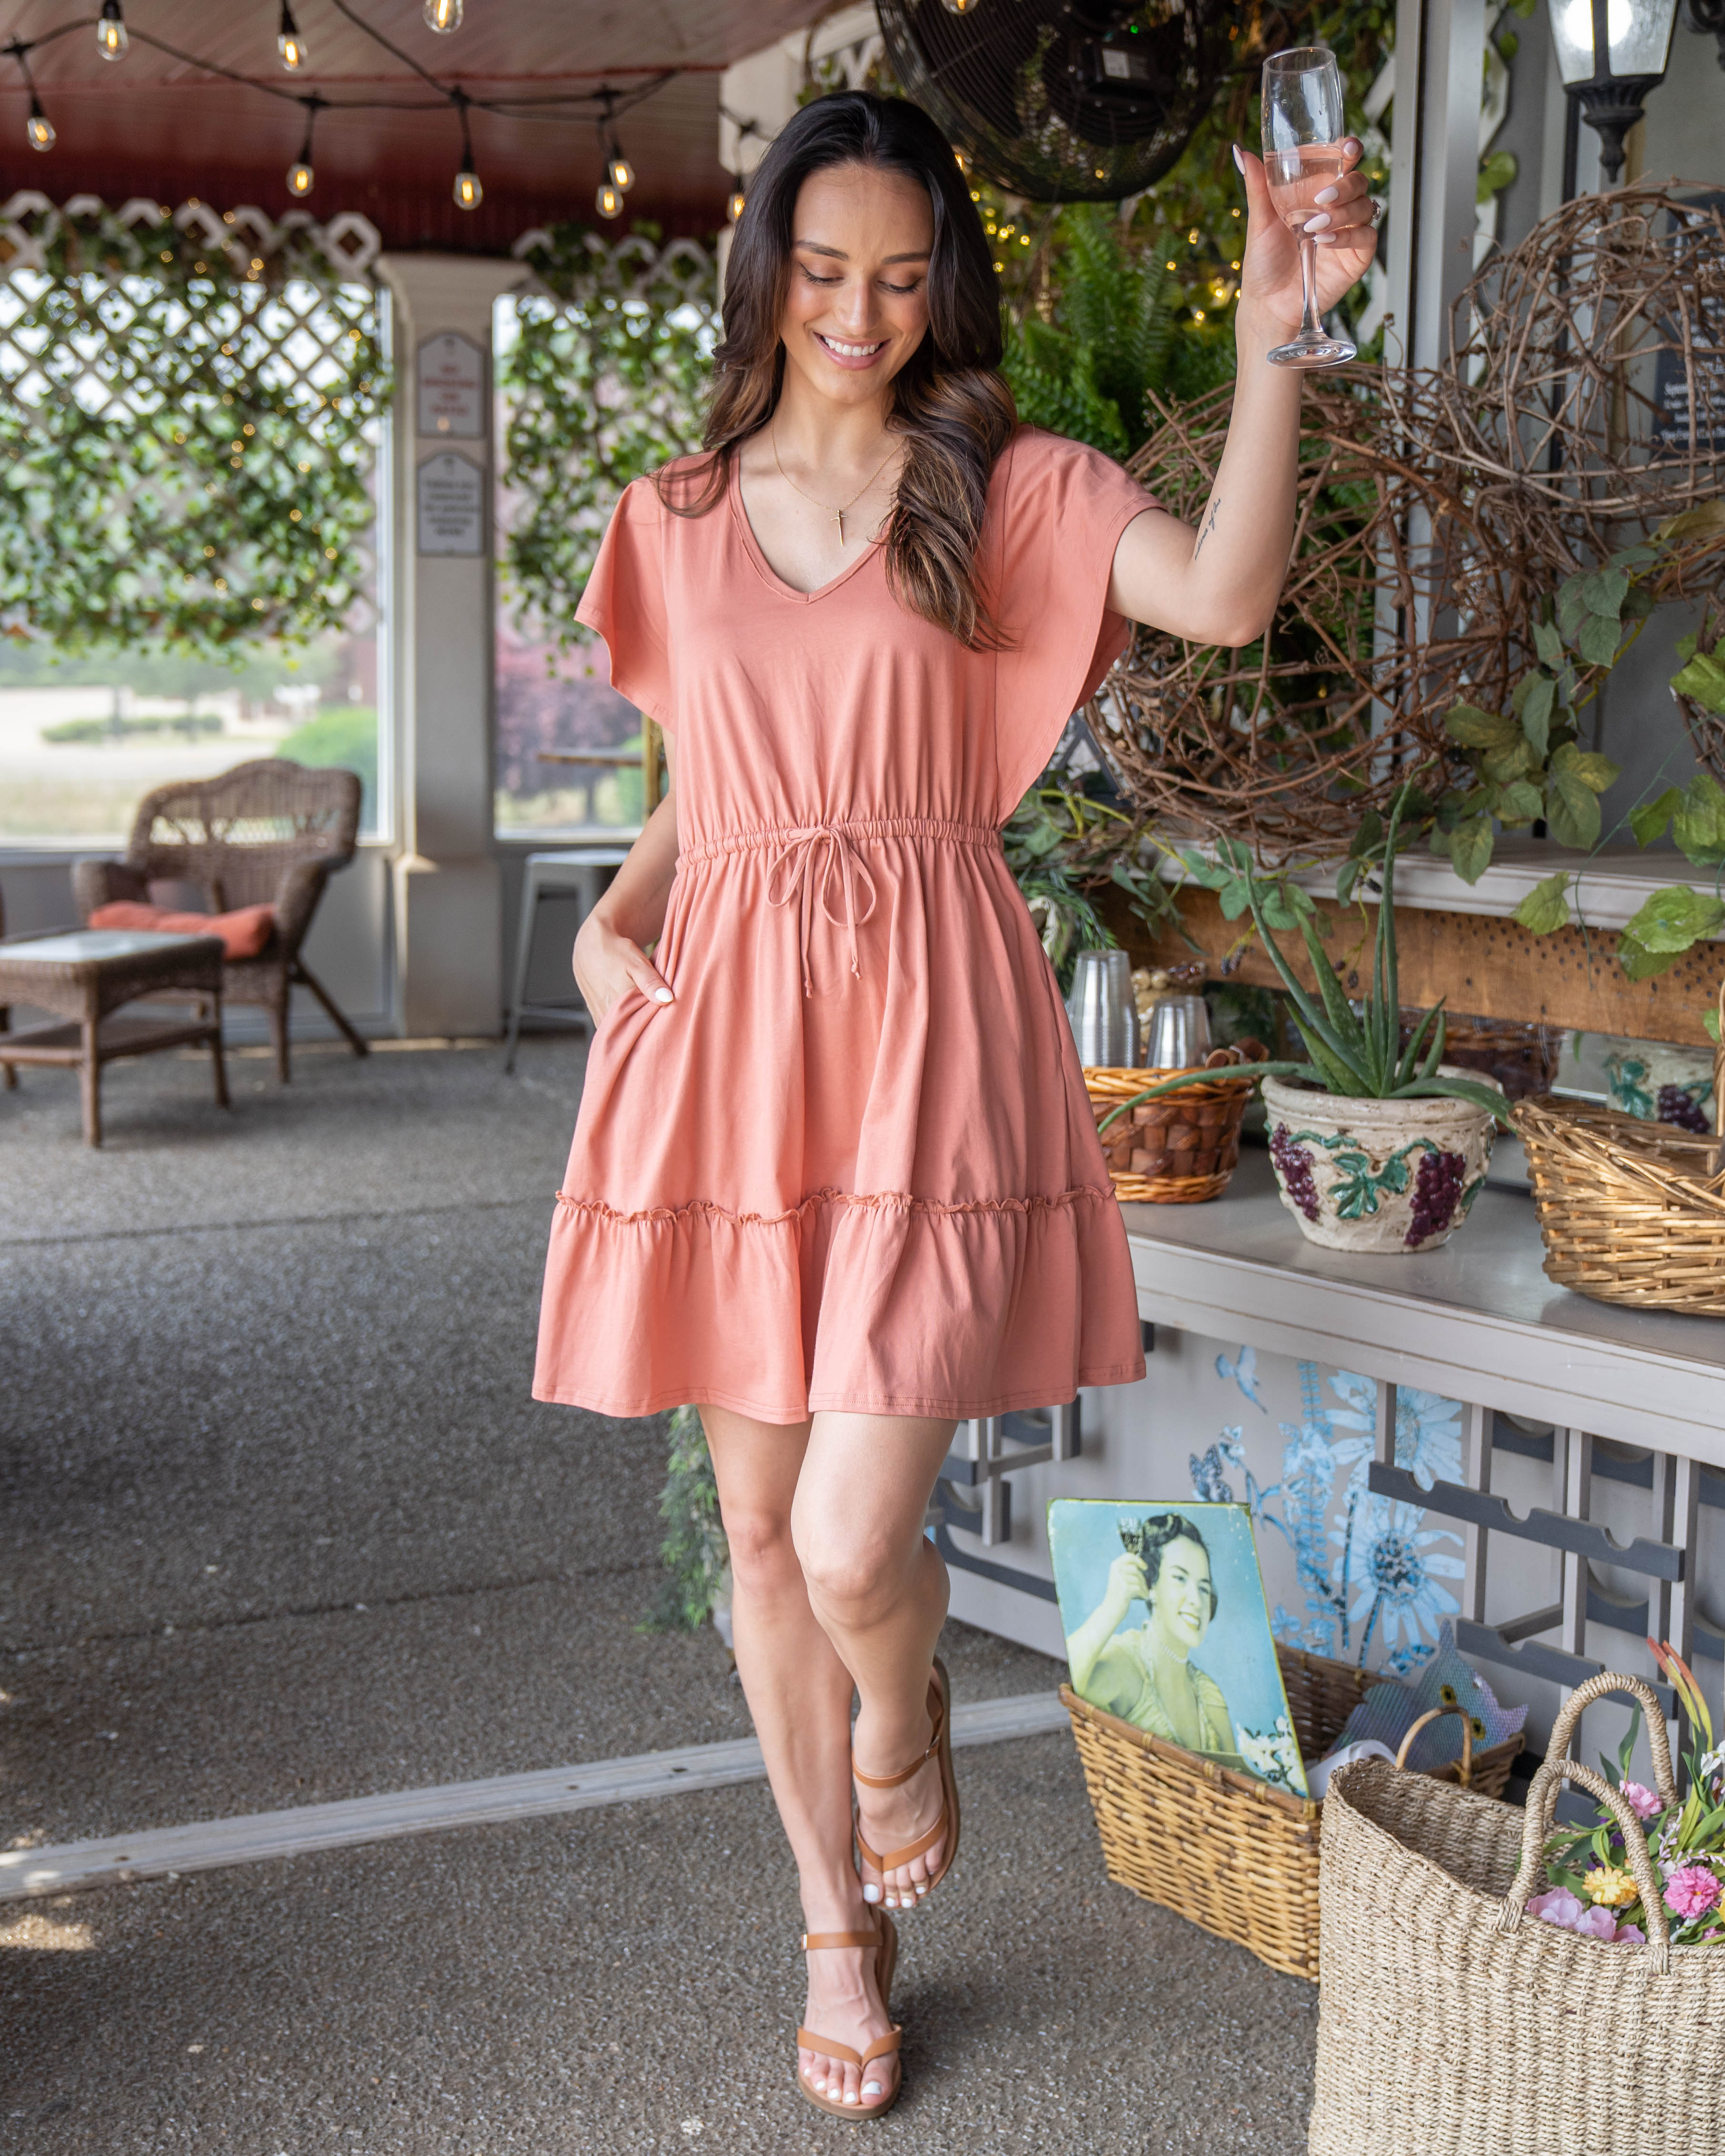 Explore Chic 2-Piece Vacation Dresses for Your Next Getaway – Shop